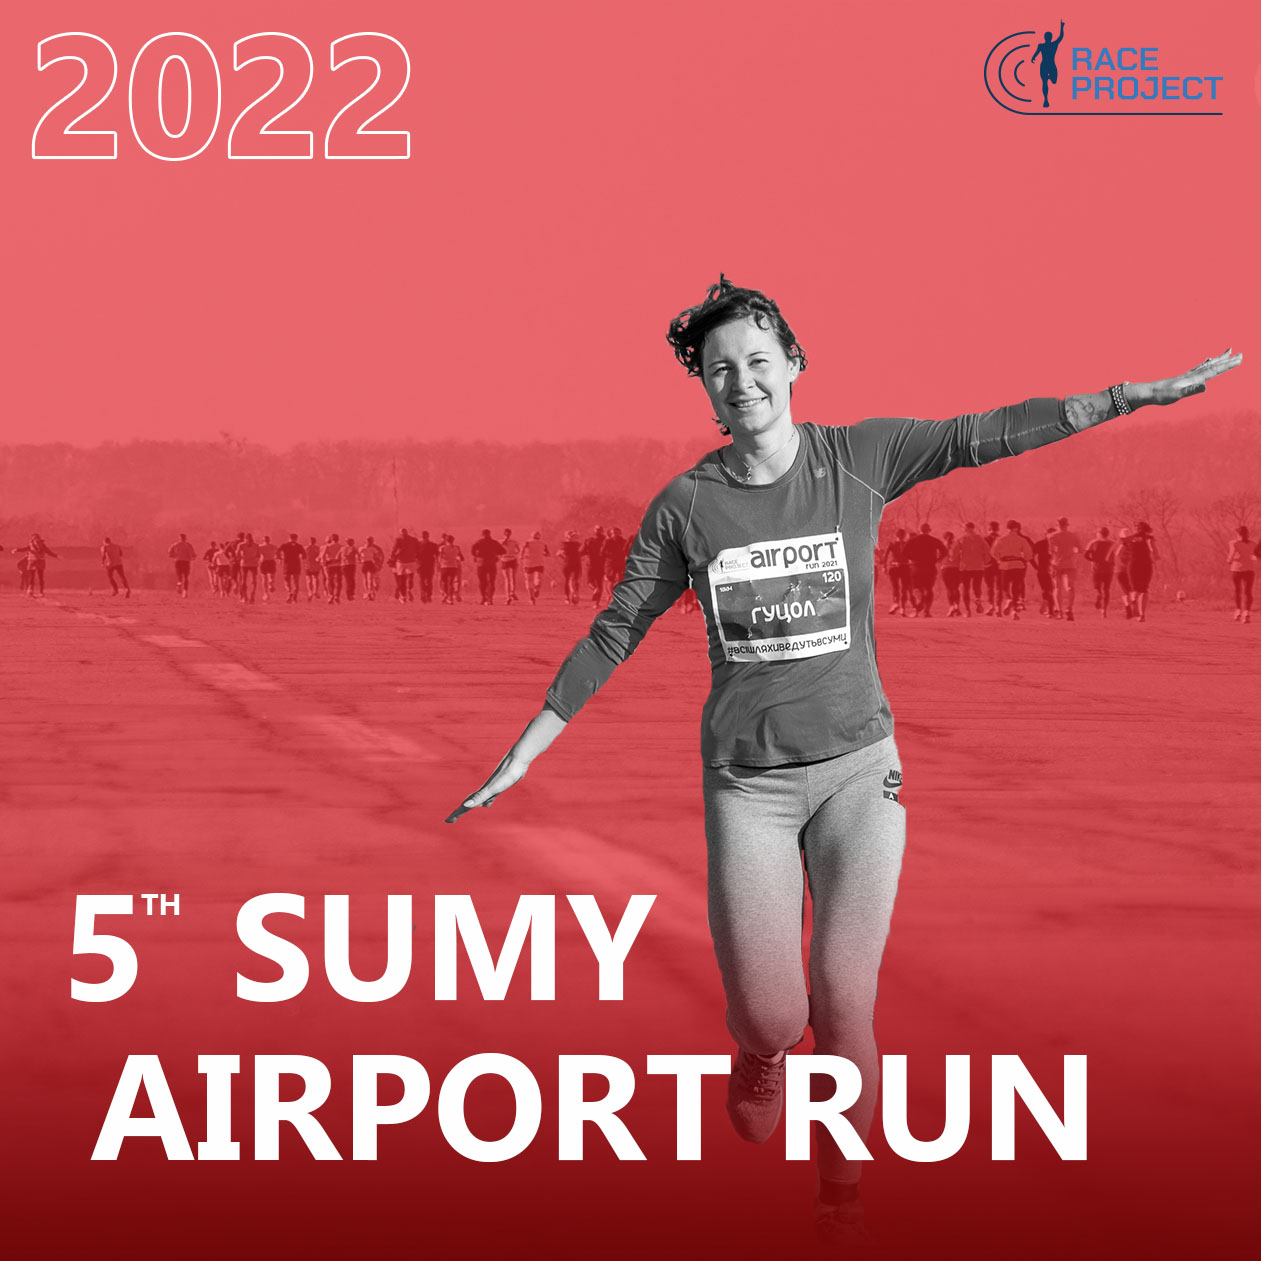 5th Sumy Airport Run 2022